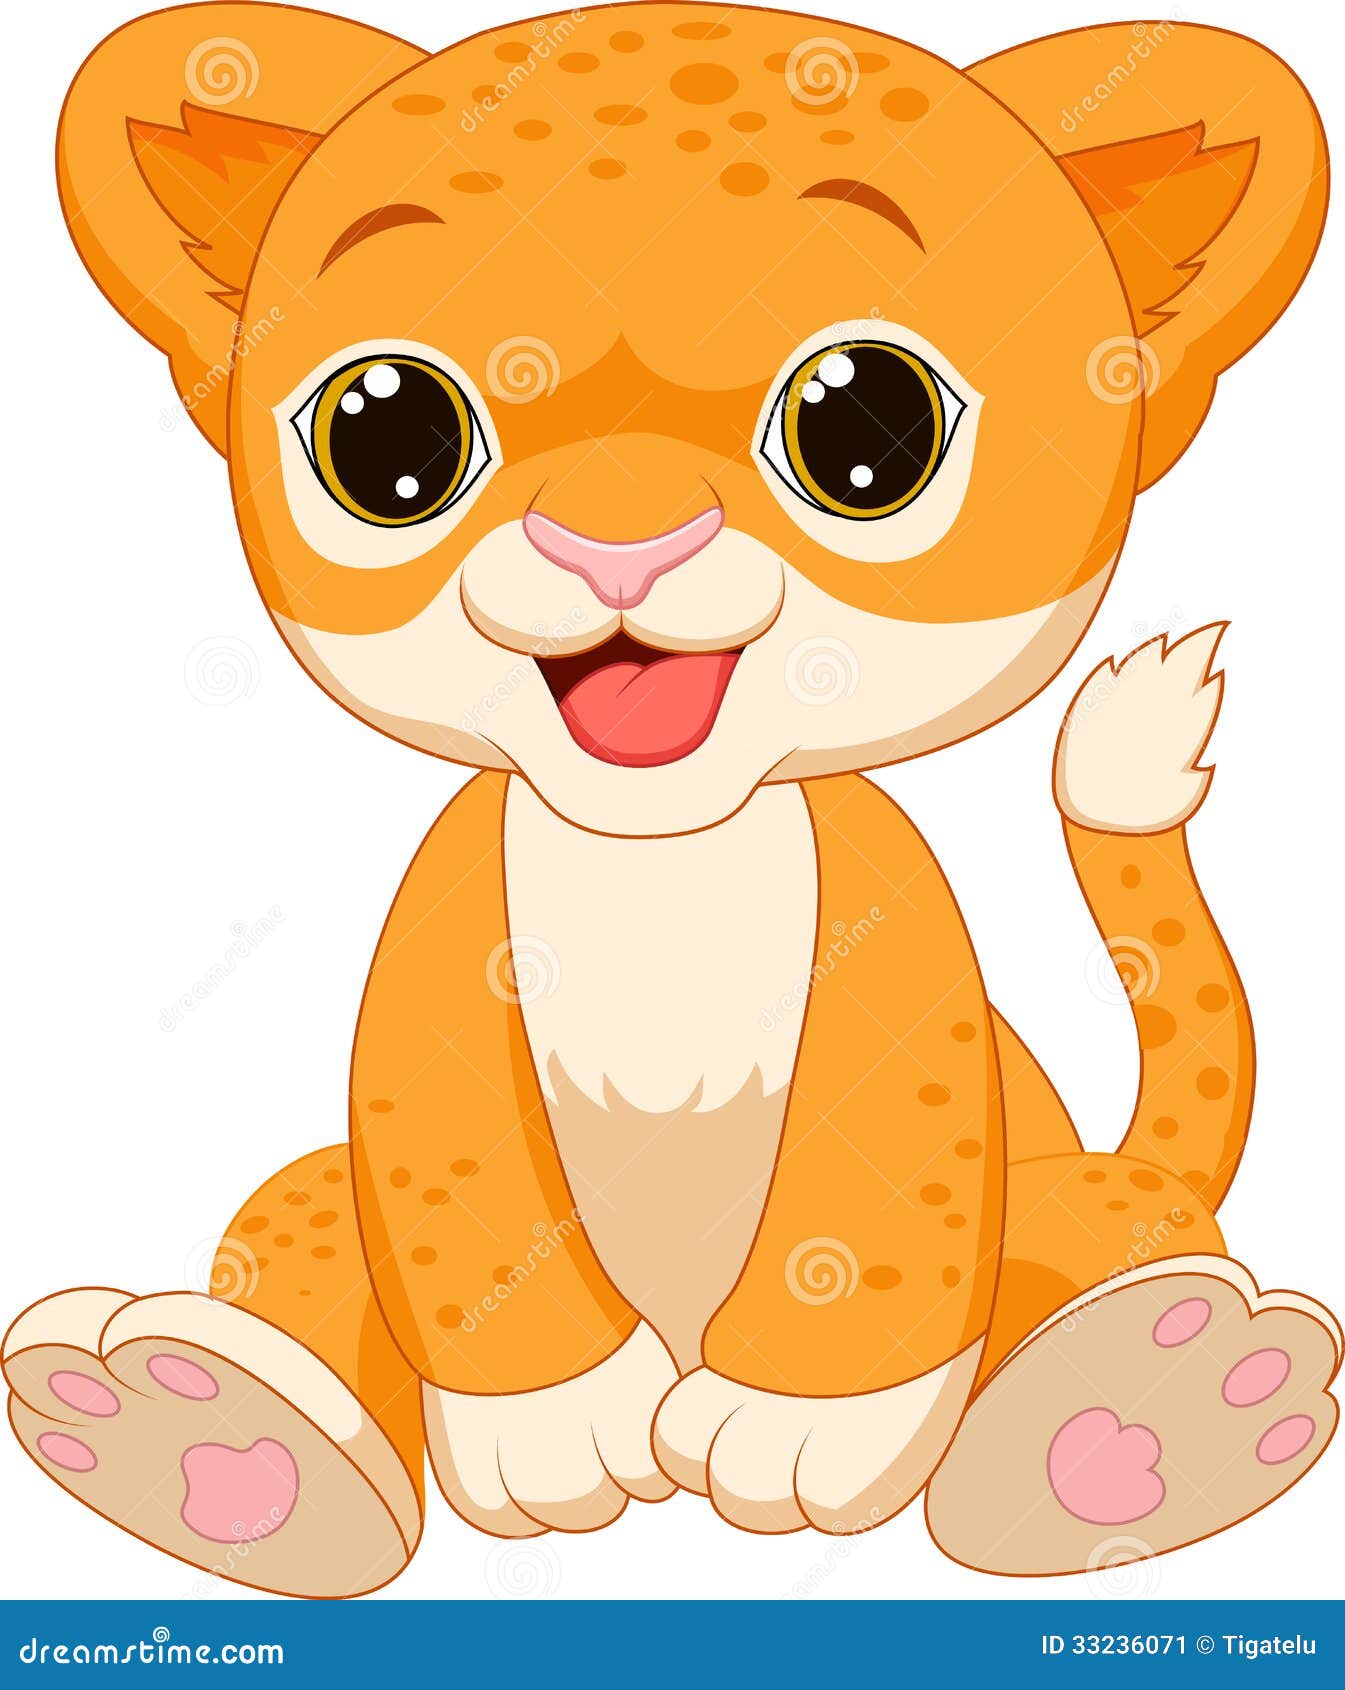 Cute Baby Lion Cartoon Illustration 33236071 - Megapixl